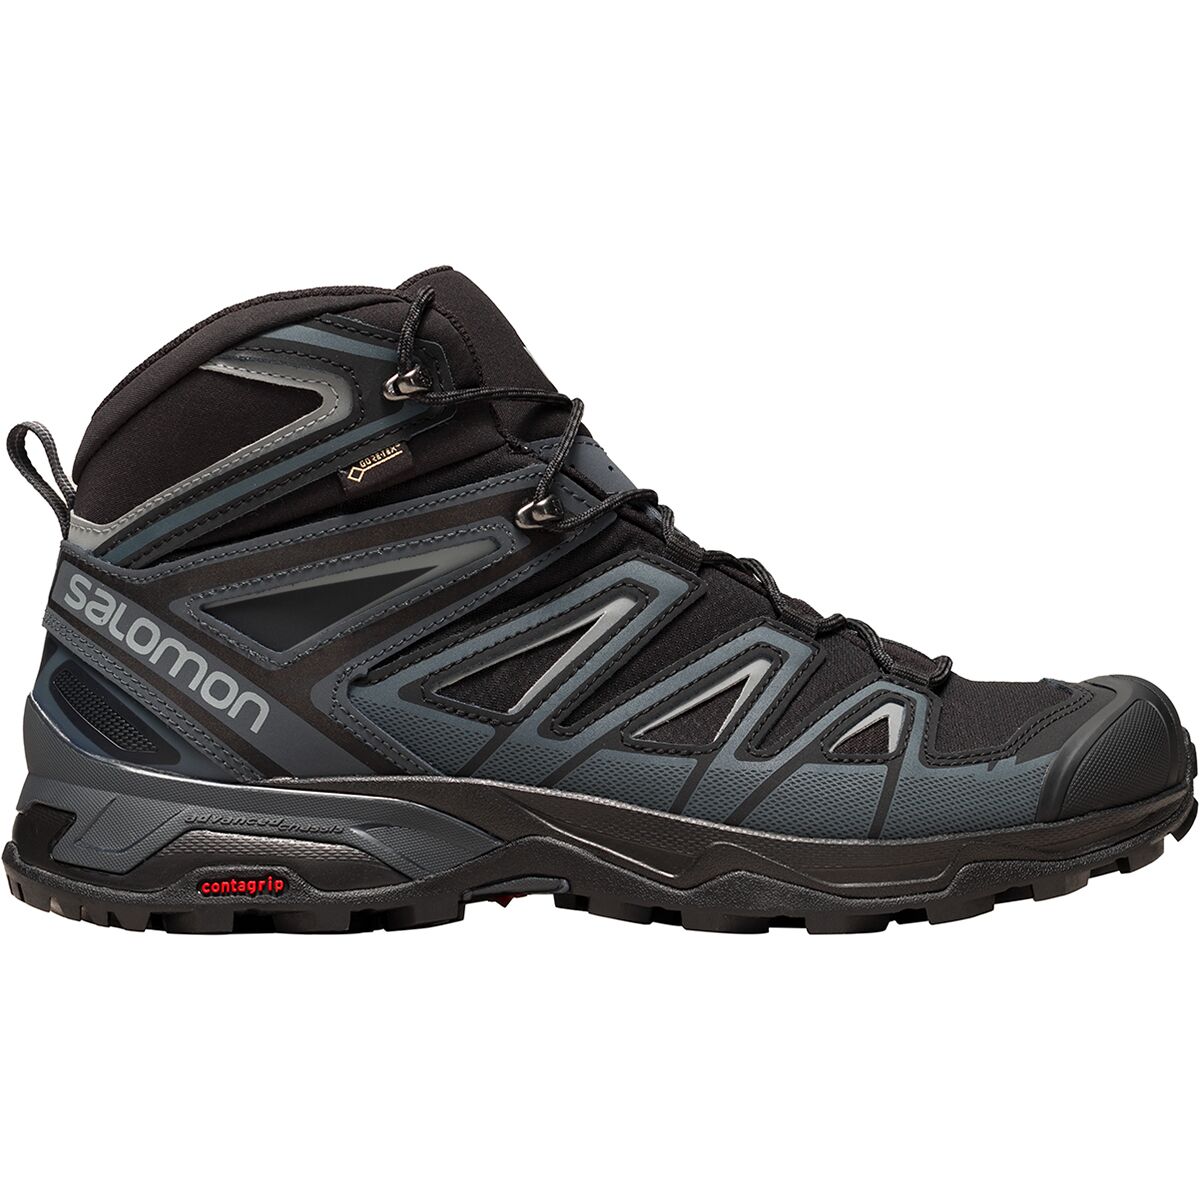 Salomon X Ultra 3 Mid GTX Hiking Boot - Men's